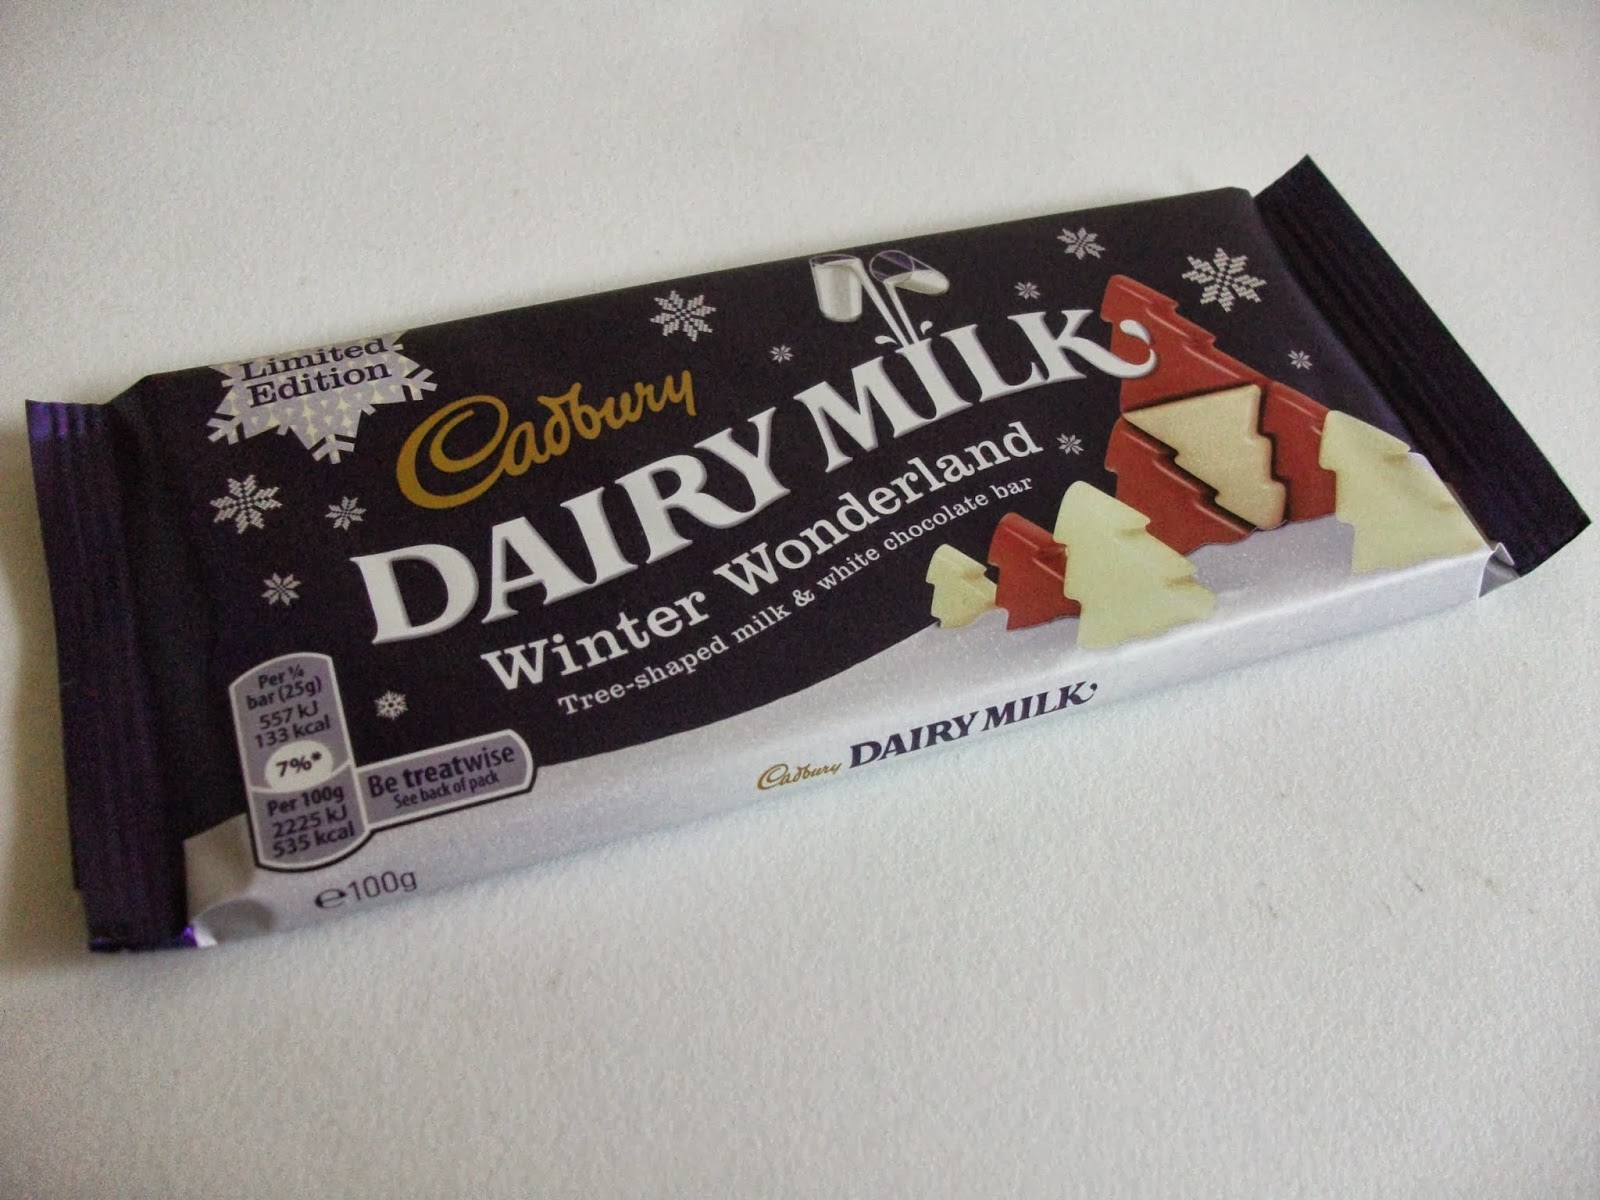 Cadbury Wispa Gold Chocolate Bars 4 Pack - ASDA Groceries